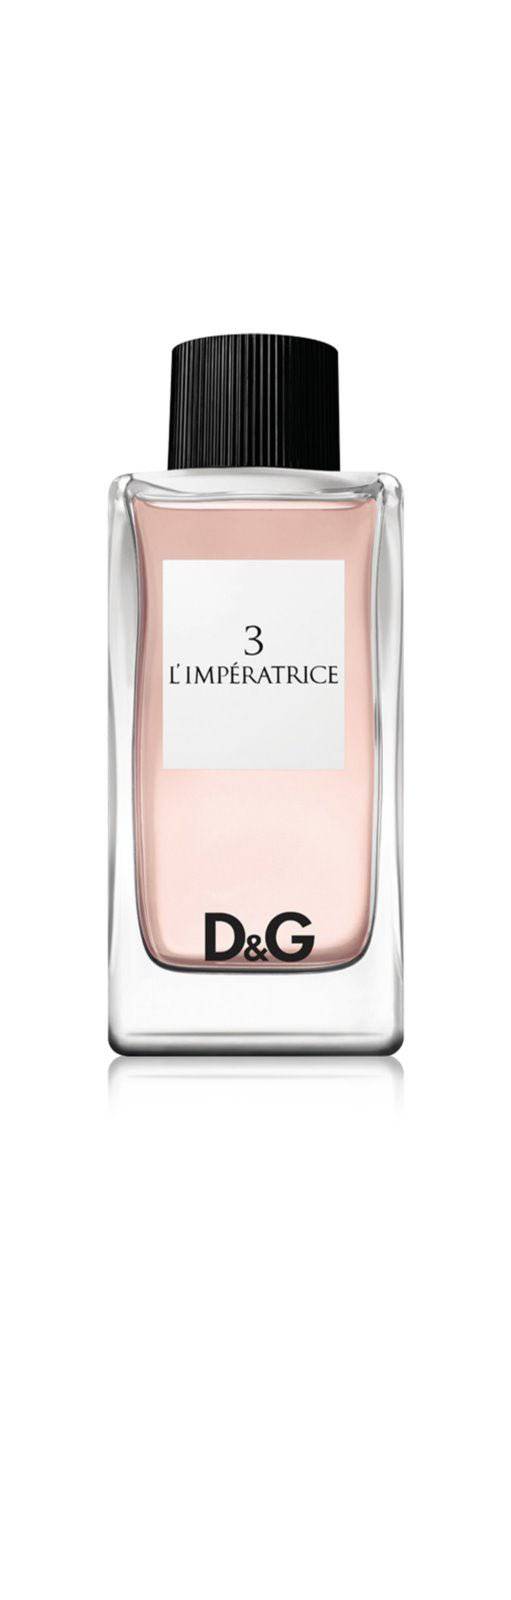 Dolce & Gabbana 3 L’Imperatrice - Jasmine Parfums- [ean]